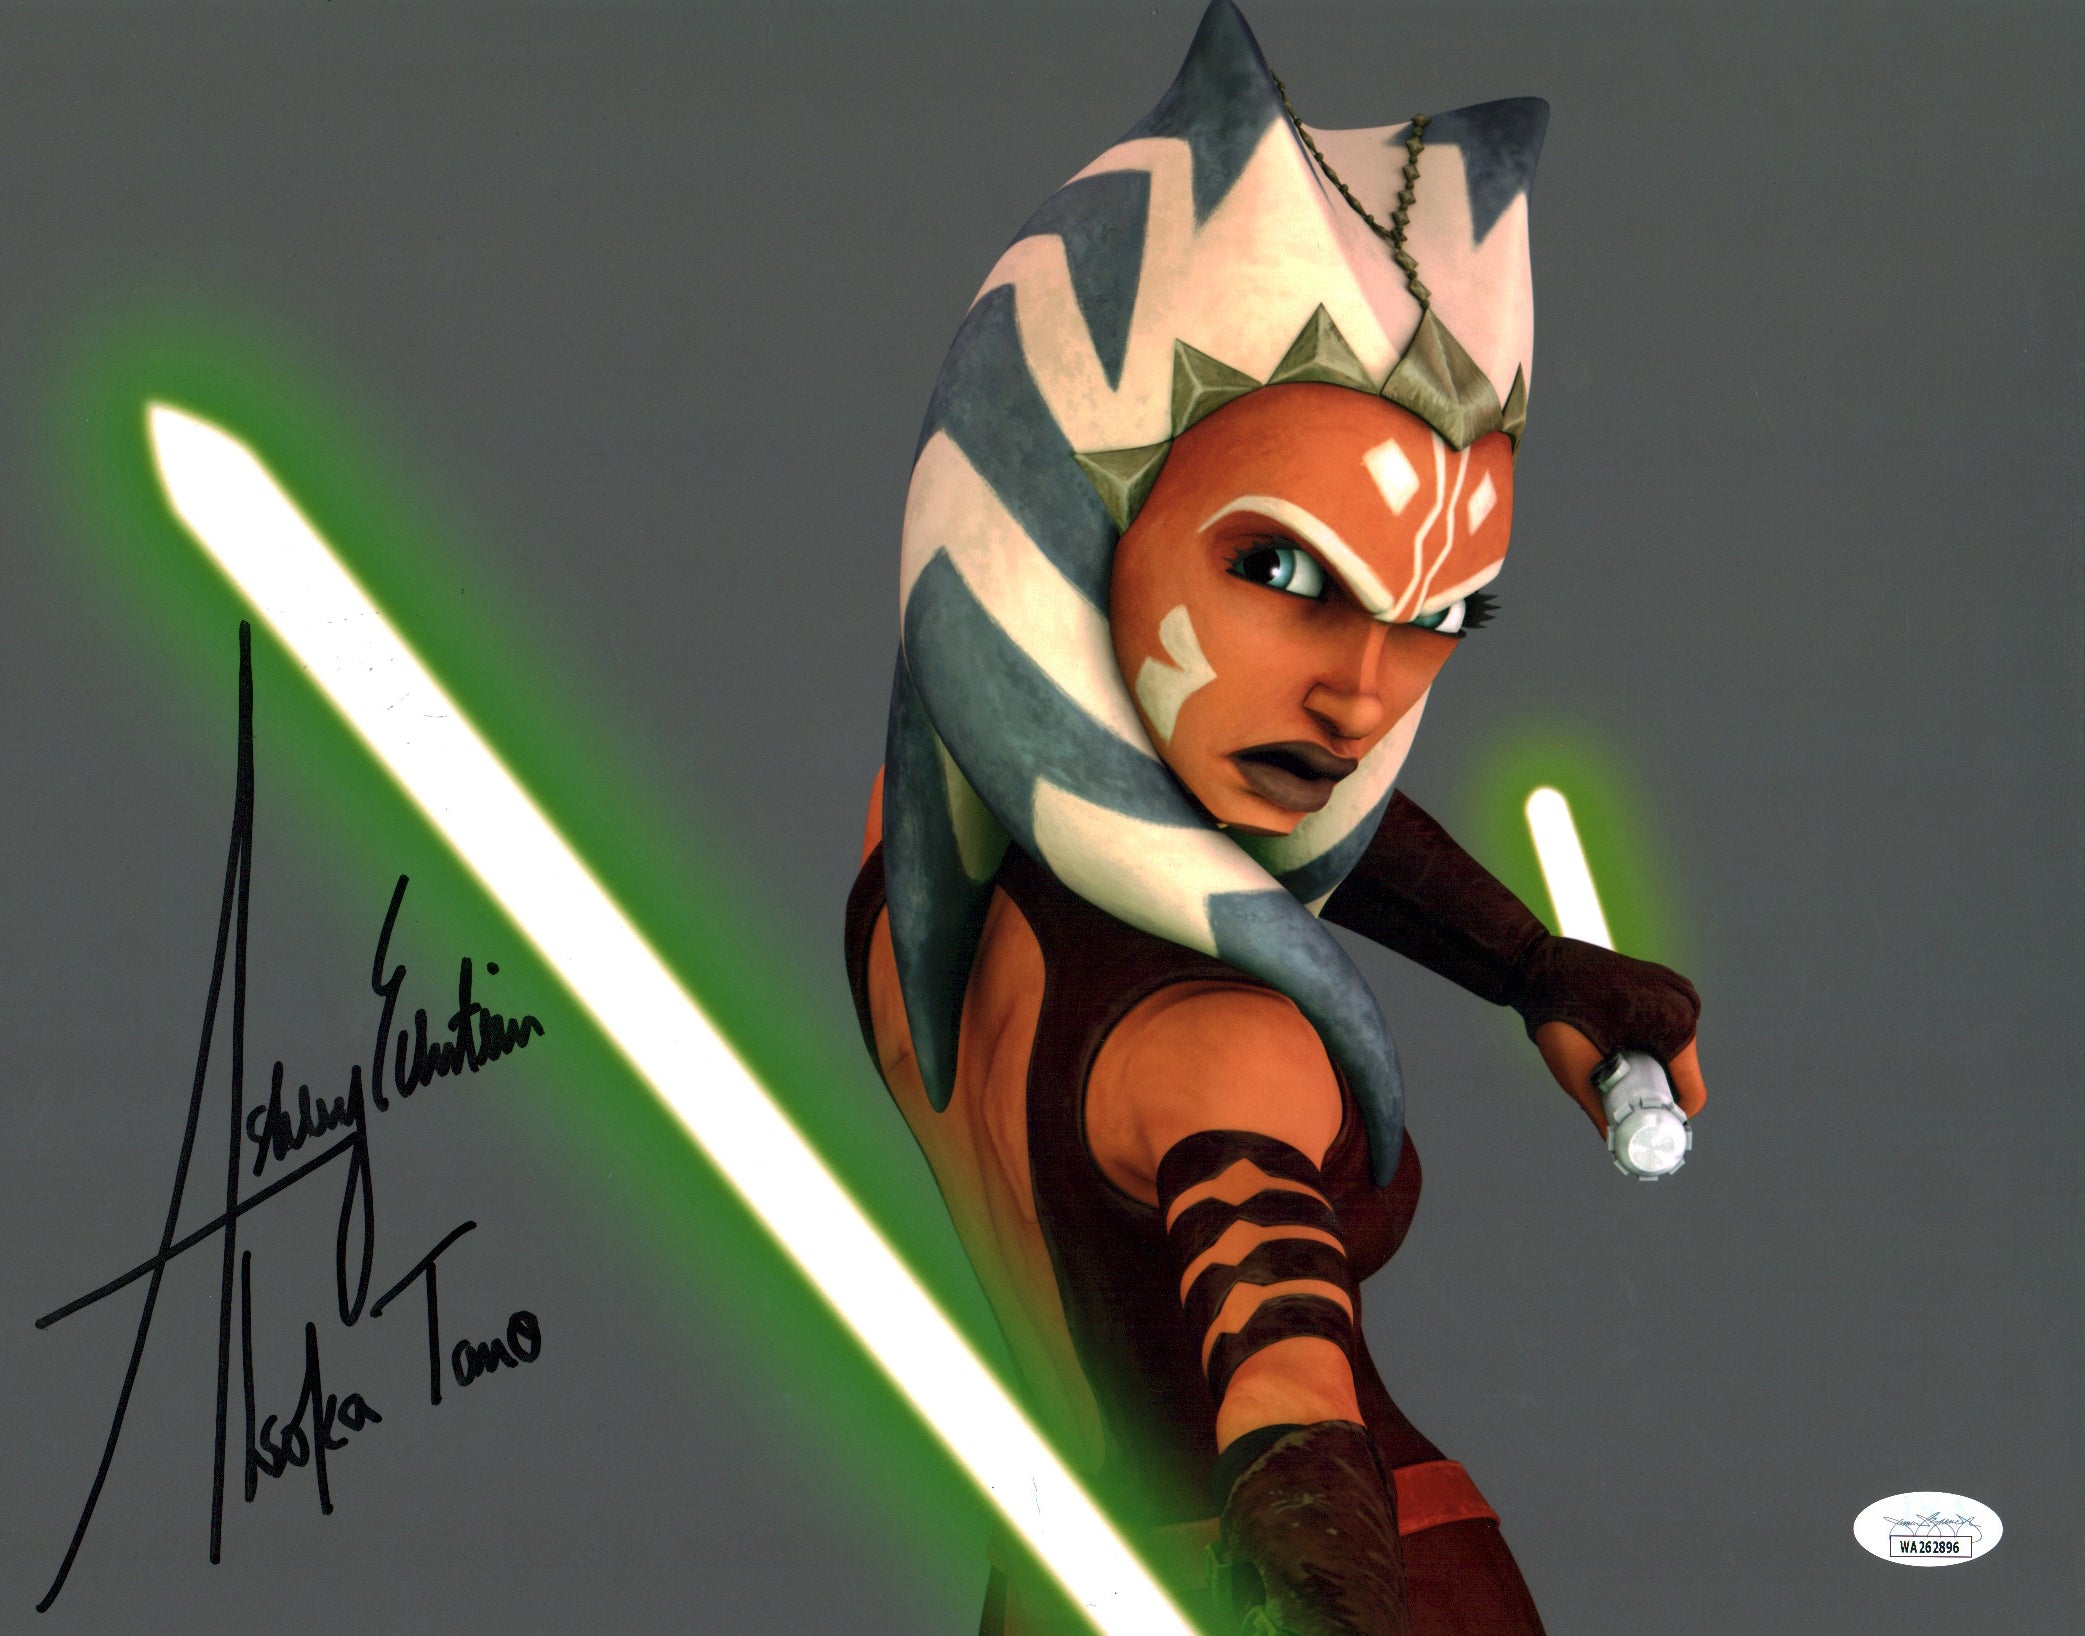 Ashley Eckstein Star Wars 11x14 Signed Photo Poster JSA COA Certified Autograph